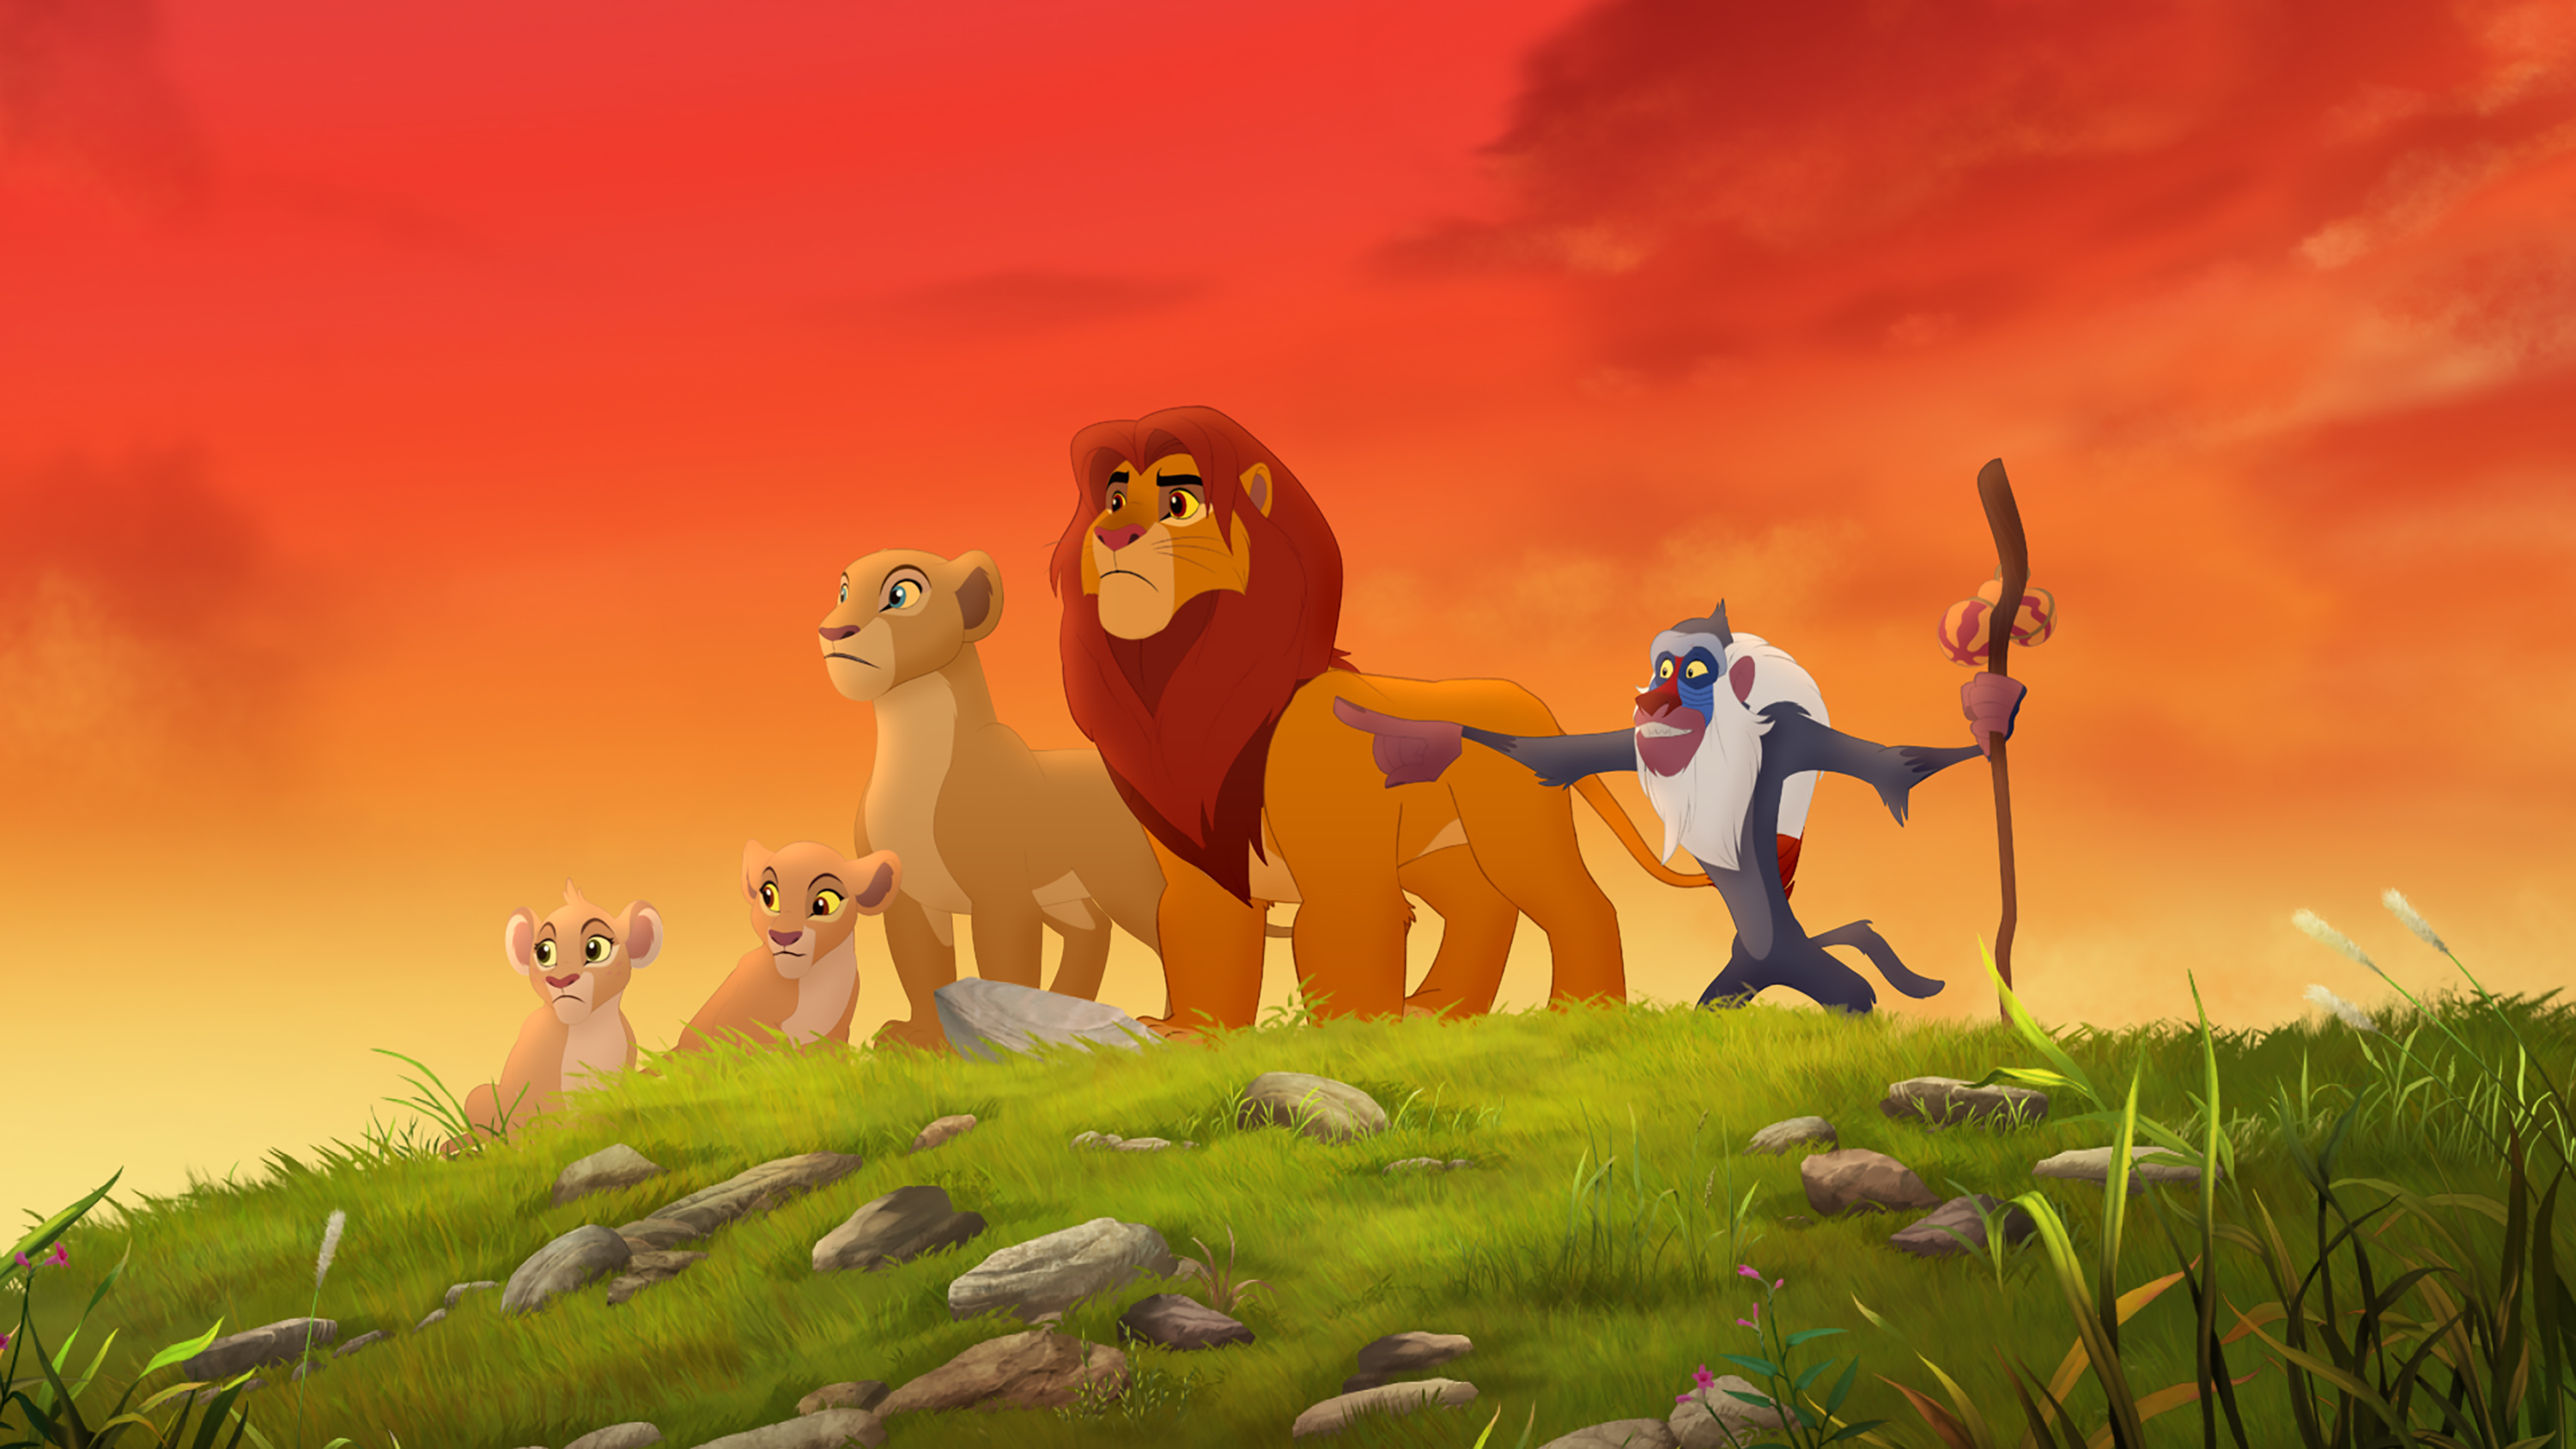 THE LION GUARD - "The Lion Guard: Return of the Roar" - The epic storytelling of Disney's "The Lion King" continues with "The Lion Guard: Return of the Roar," a primetime television movie event premiering SUNDAY, NOVEMBER 22 (7:00 p.m., ET/PT) on Disney Channel. (Disney Junior) TIIFU, KIARA, NALA, SIMBA, RAFIKI